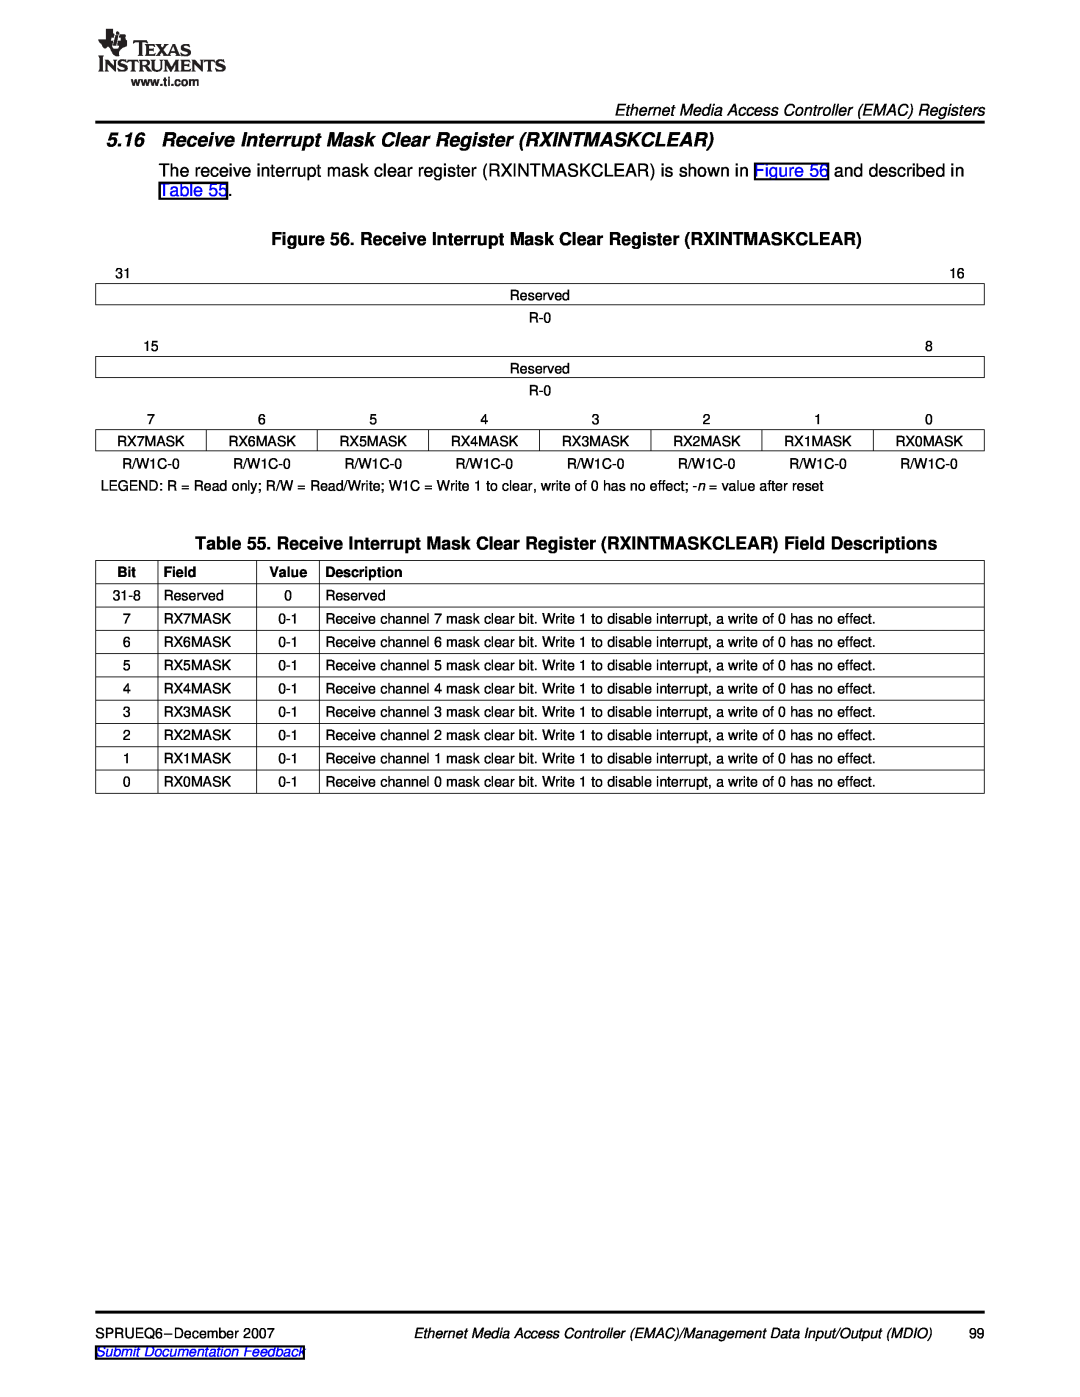 Texas Instruments TMS320DM646x manual Receive Interrupt Mask Clear Register RXINTMASKCLEAR, Field, Value, Description 